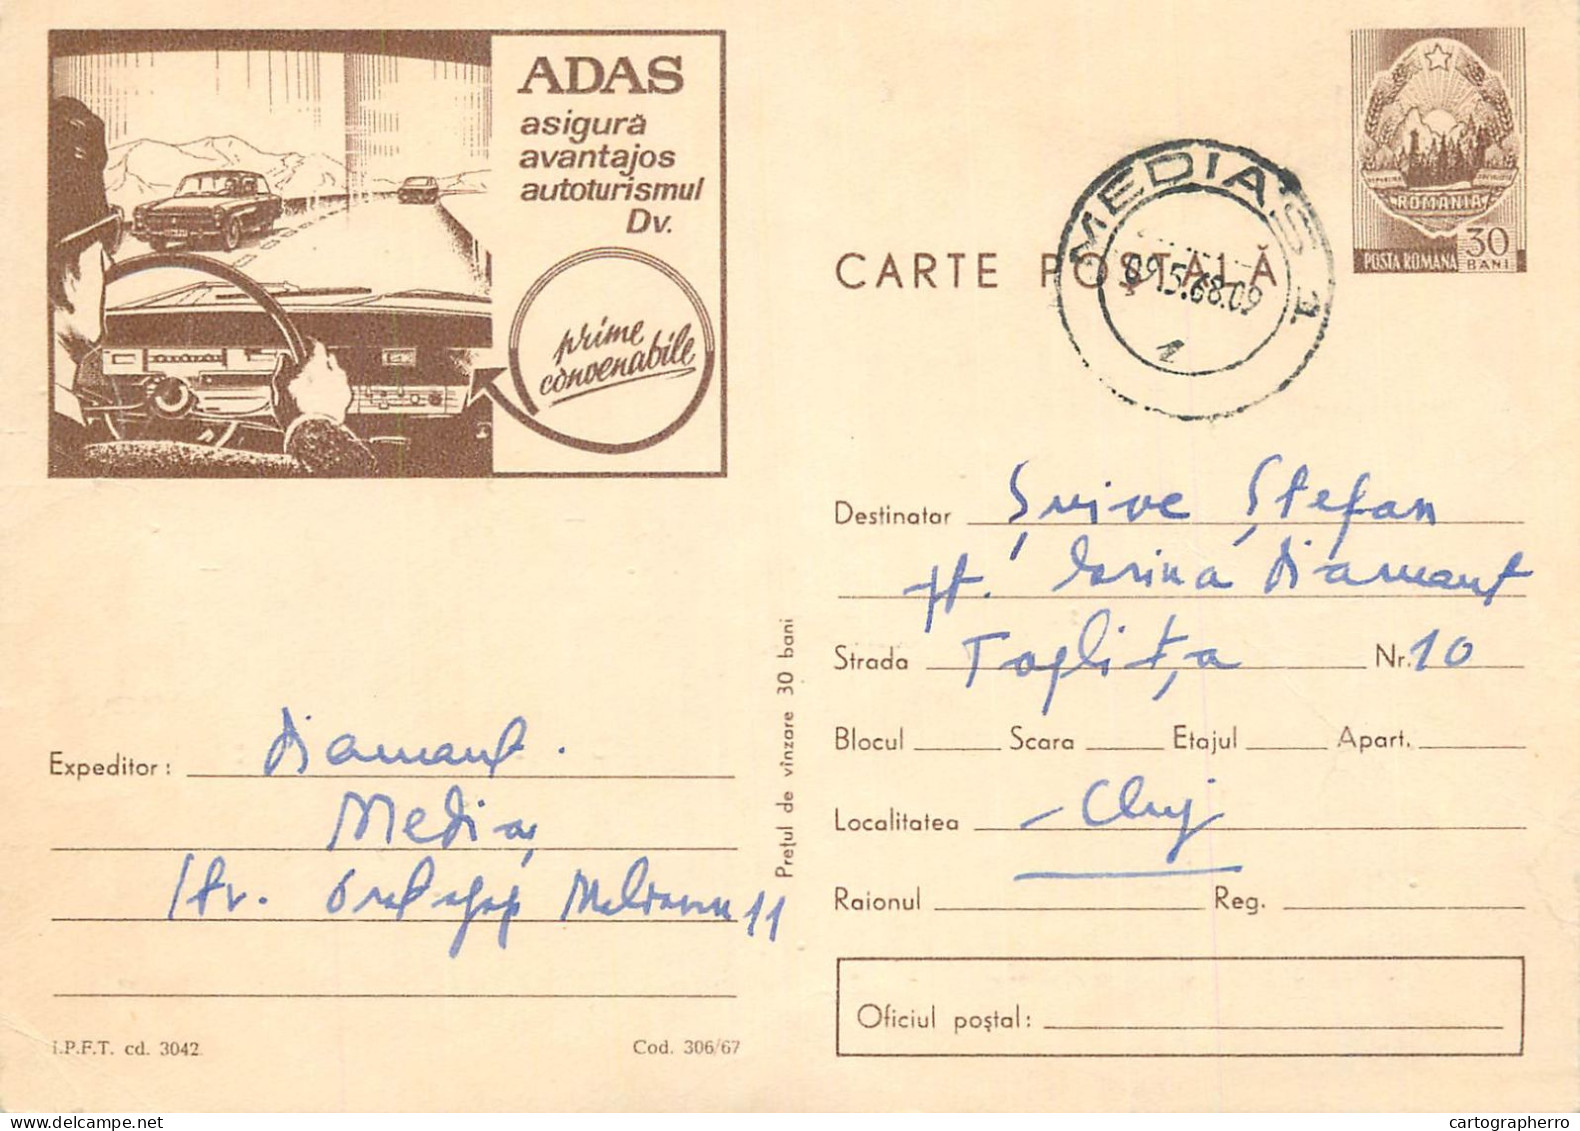 Postal Stationery Postcard Romania ADAS Prime Asigurare - Roumanie